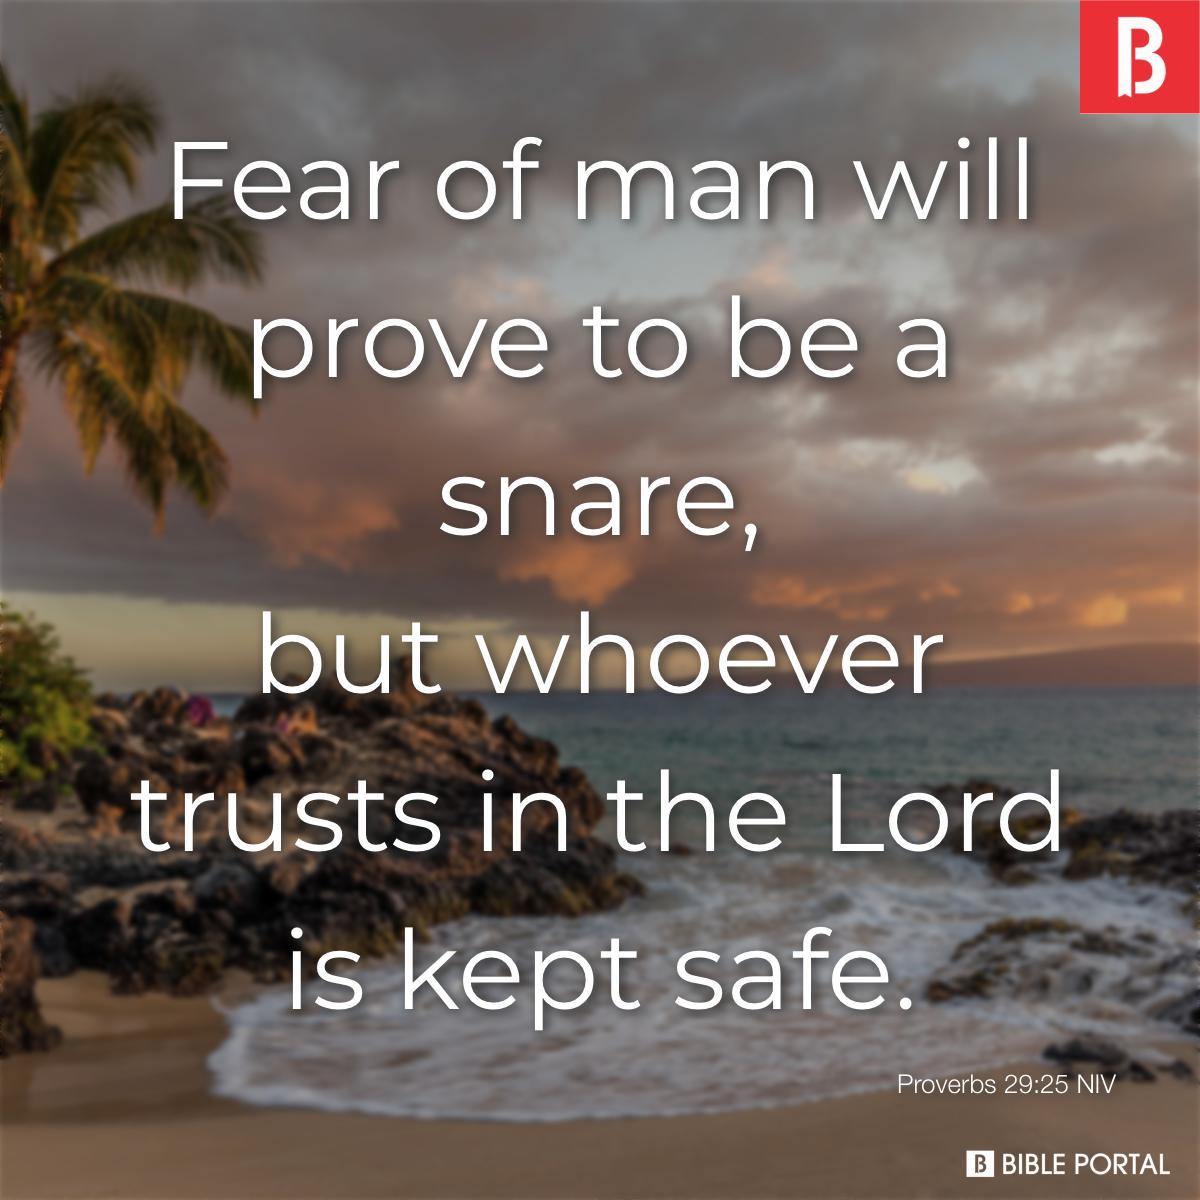 Proverbs 29:25 NIV